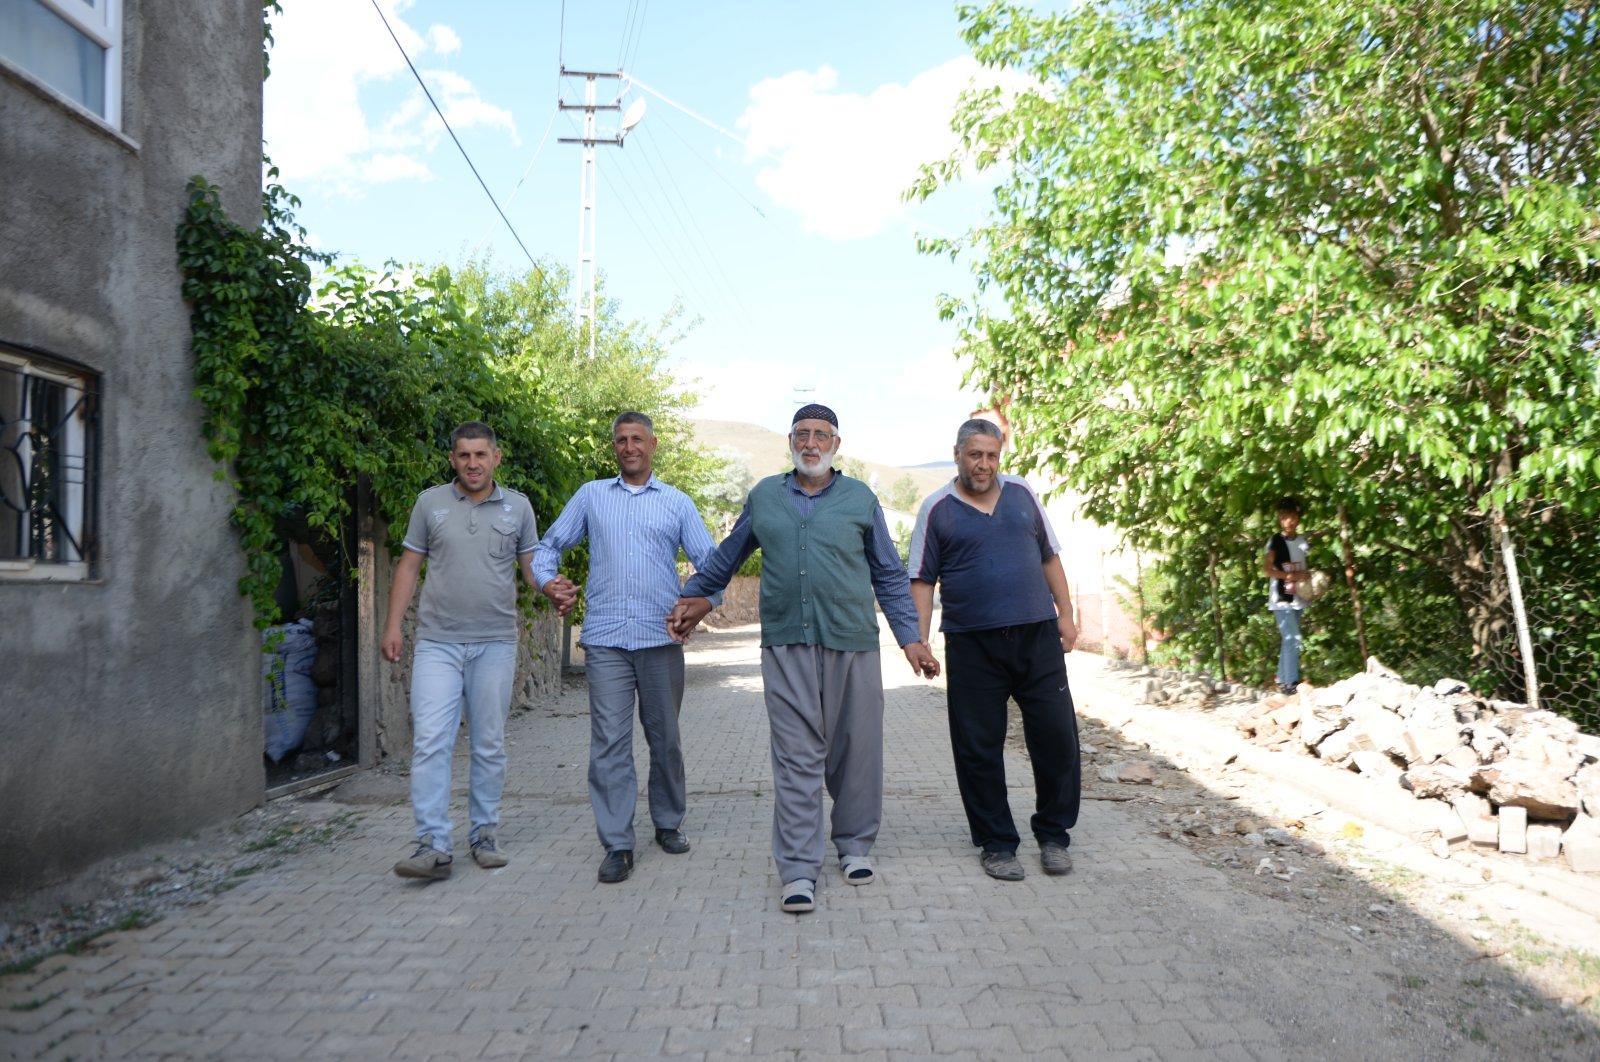 Şefik Ayceman (2nd R) walks with his sons, in Bingöl, eastern Turkey, June 18, 2022. (AA Photo)